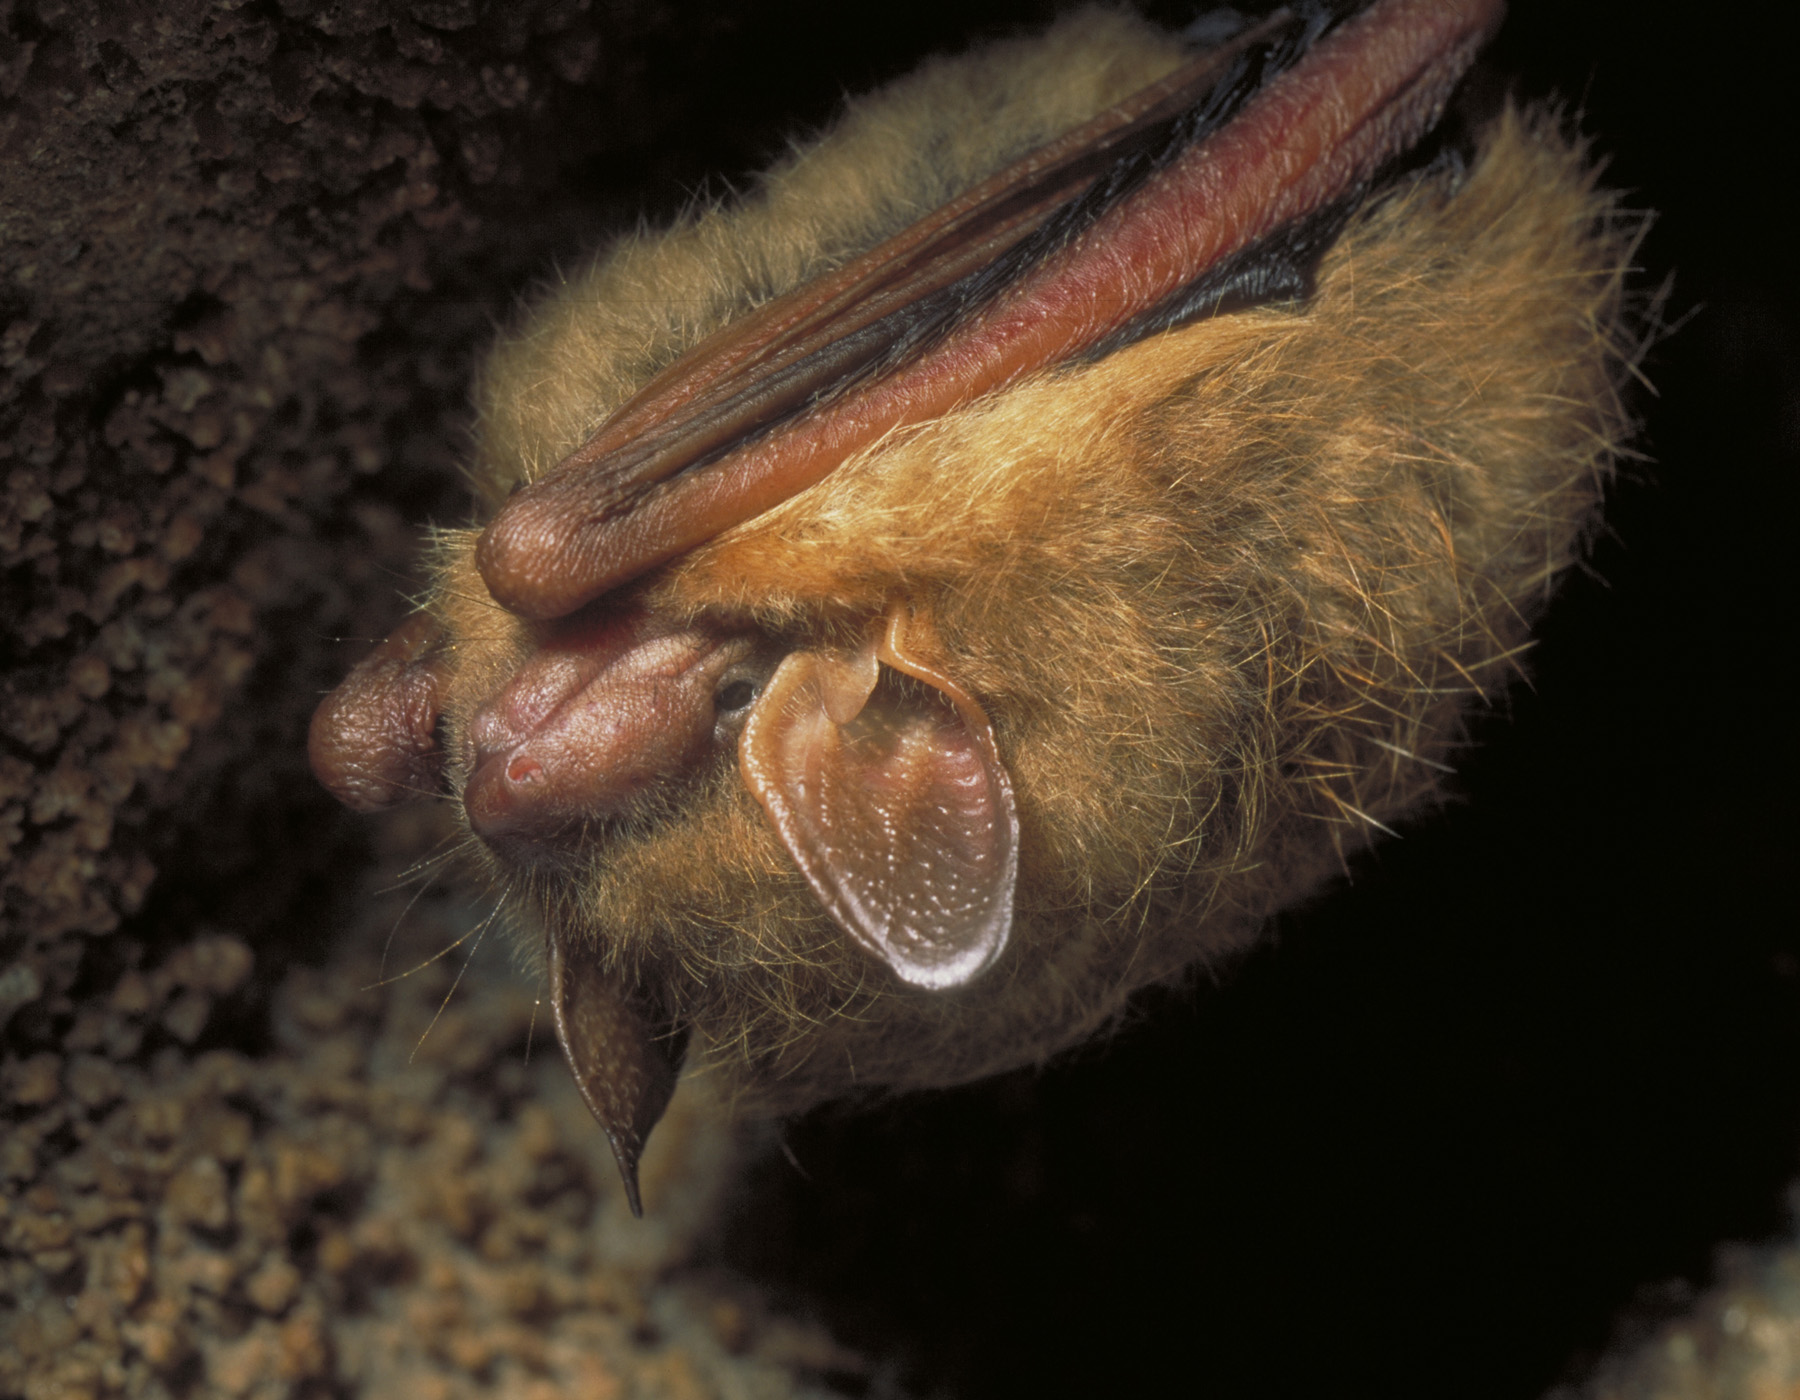 Tricolored bat, Perimyotis subflavus, by Missouri Department of Conservation.